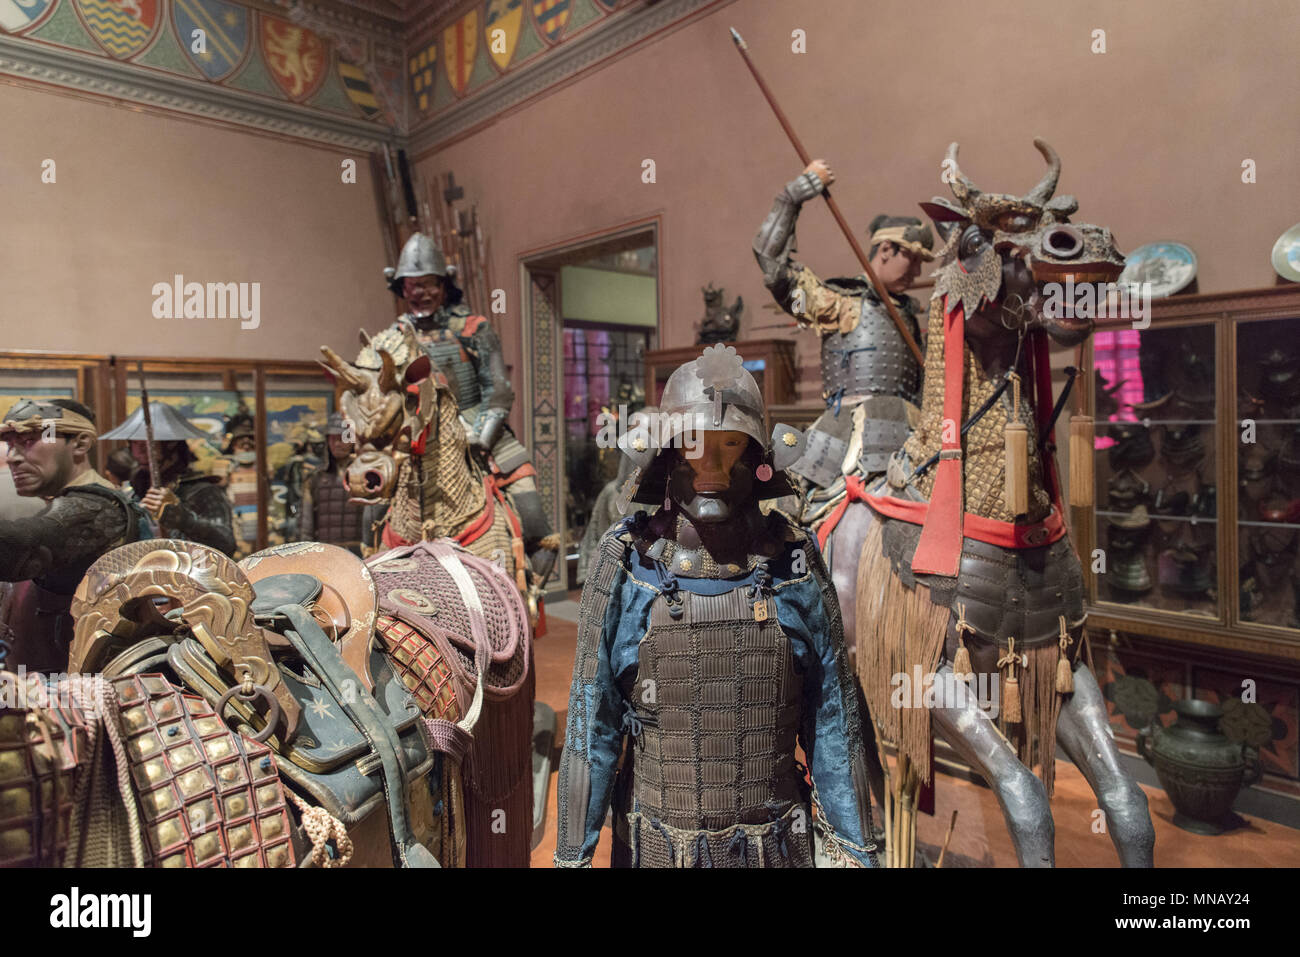 Stibbert Museum, Firenze - Florence - Interior - Japanese armor room Stock Photo